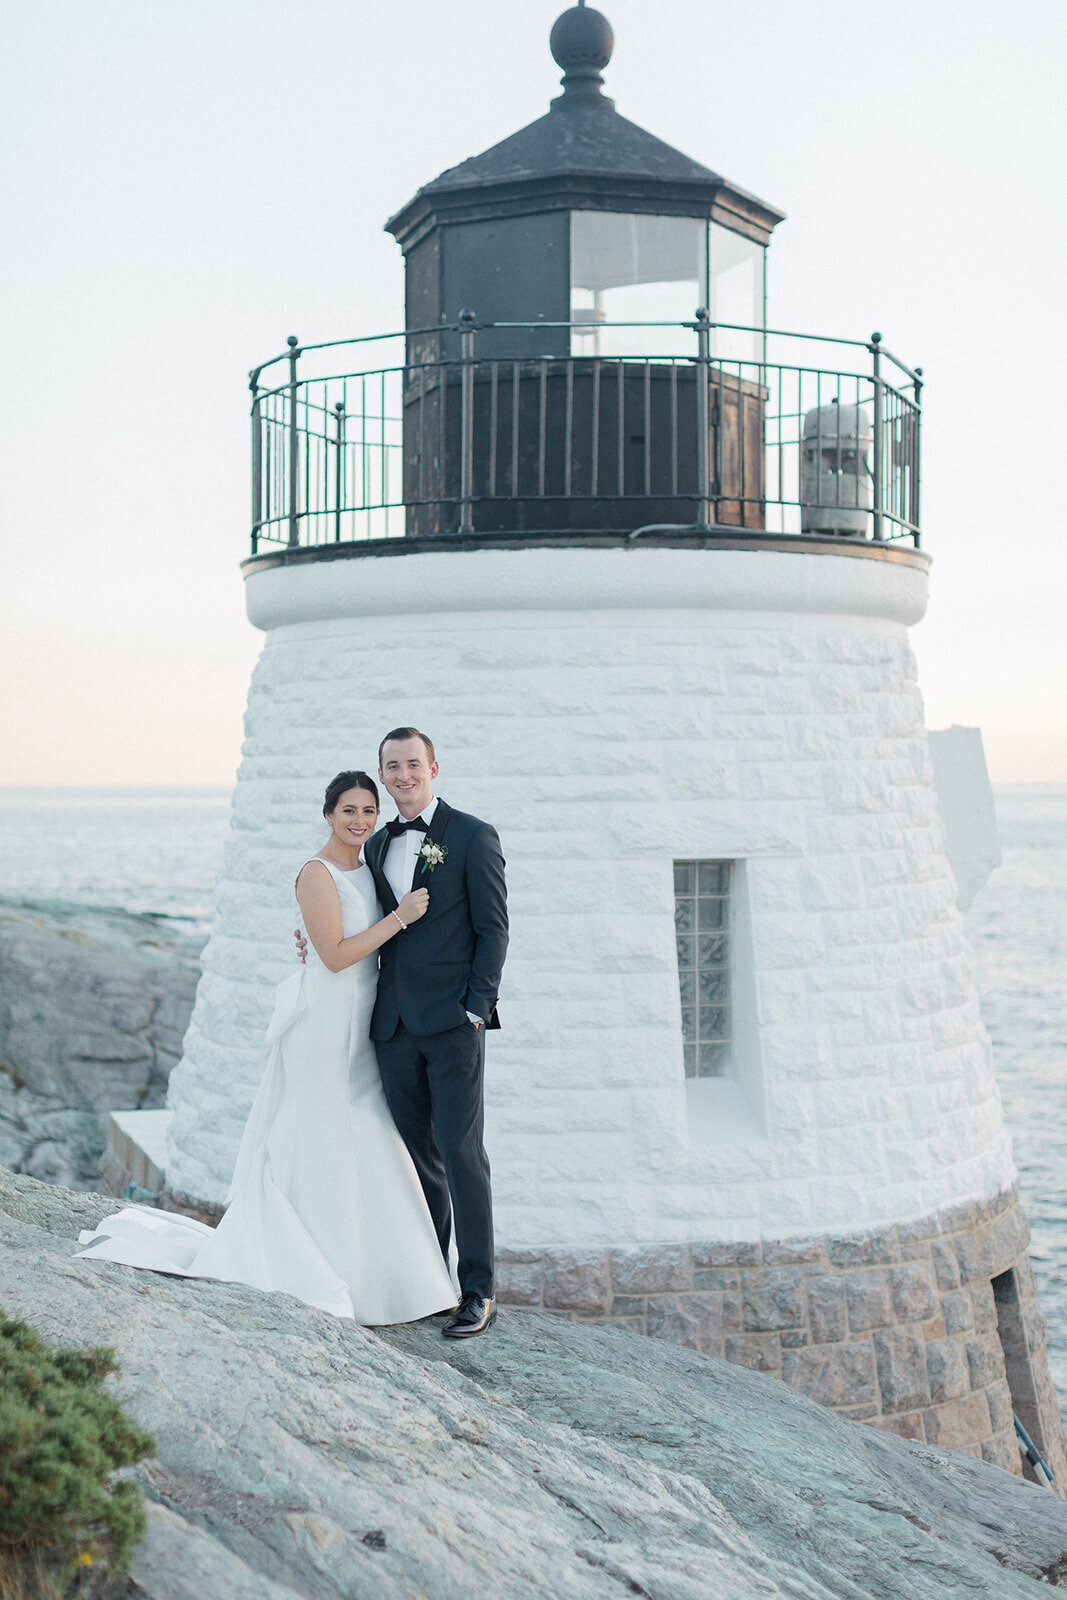 Kate-Murtaugh-Events-Castle-Hill-Inn-lighthouse-wedding-couple-portrait